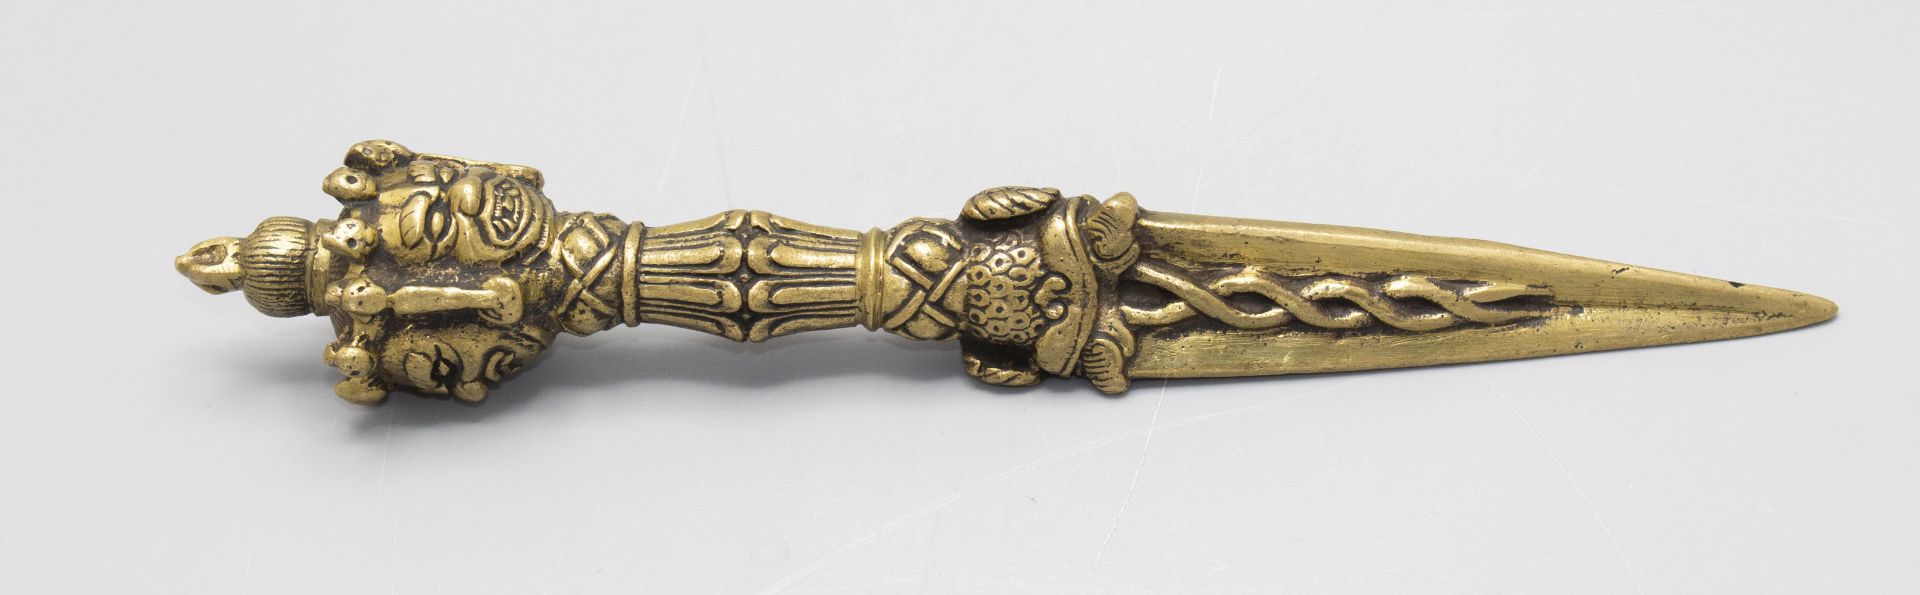 Phurba Ritualdolch / Phurba ritual dagger, Tibet, 19. Jh.